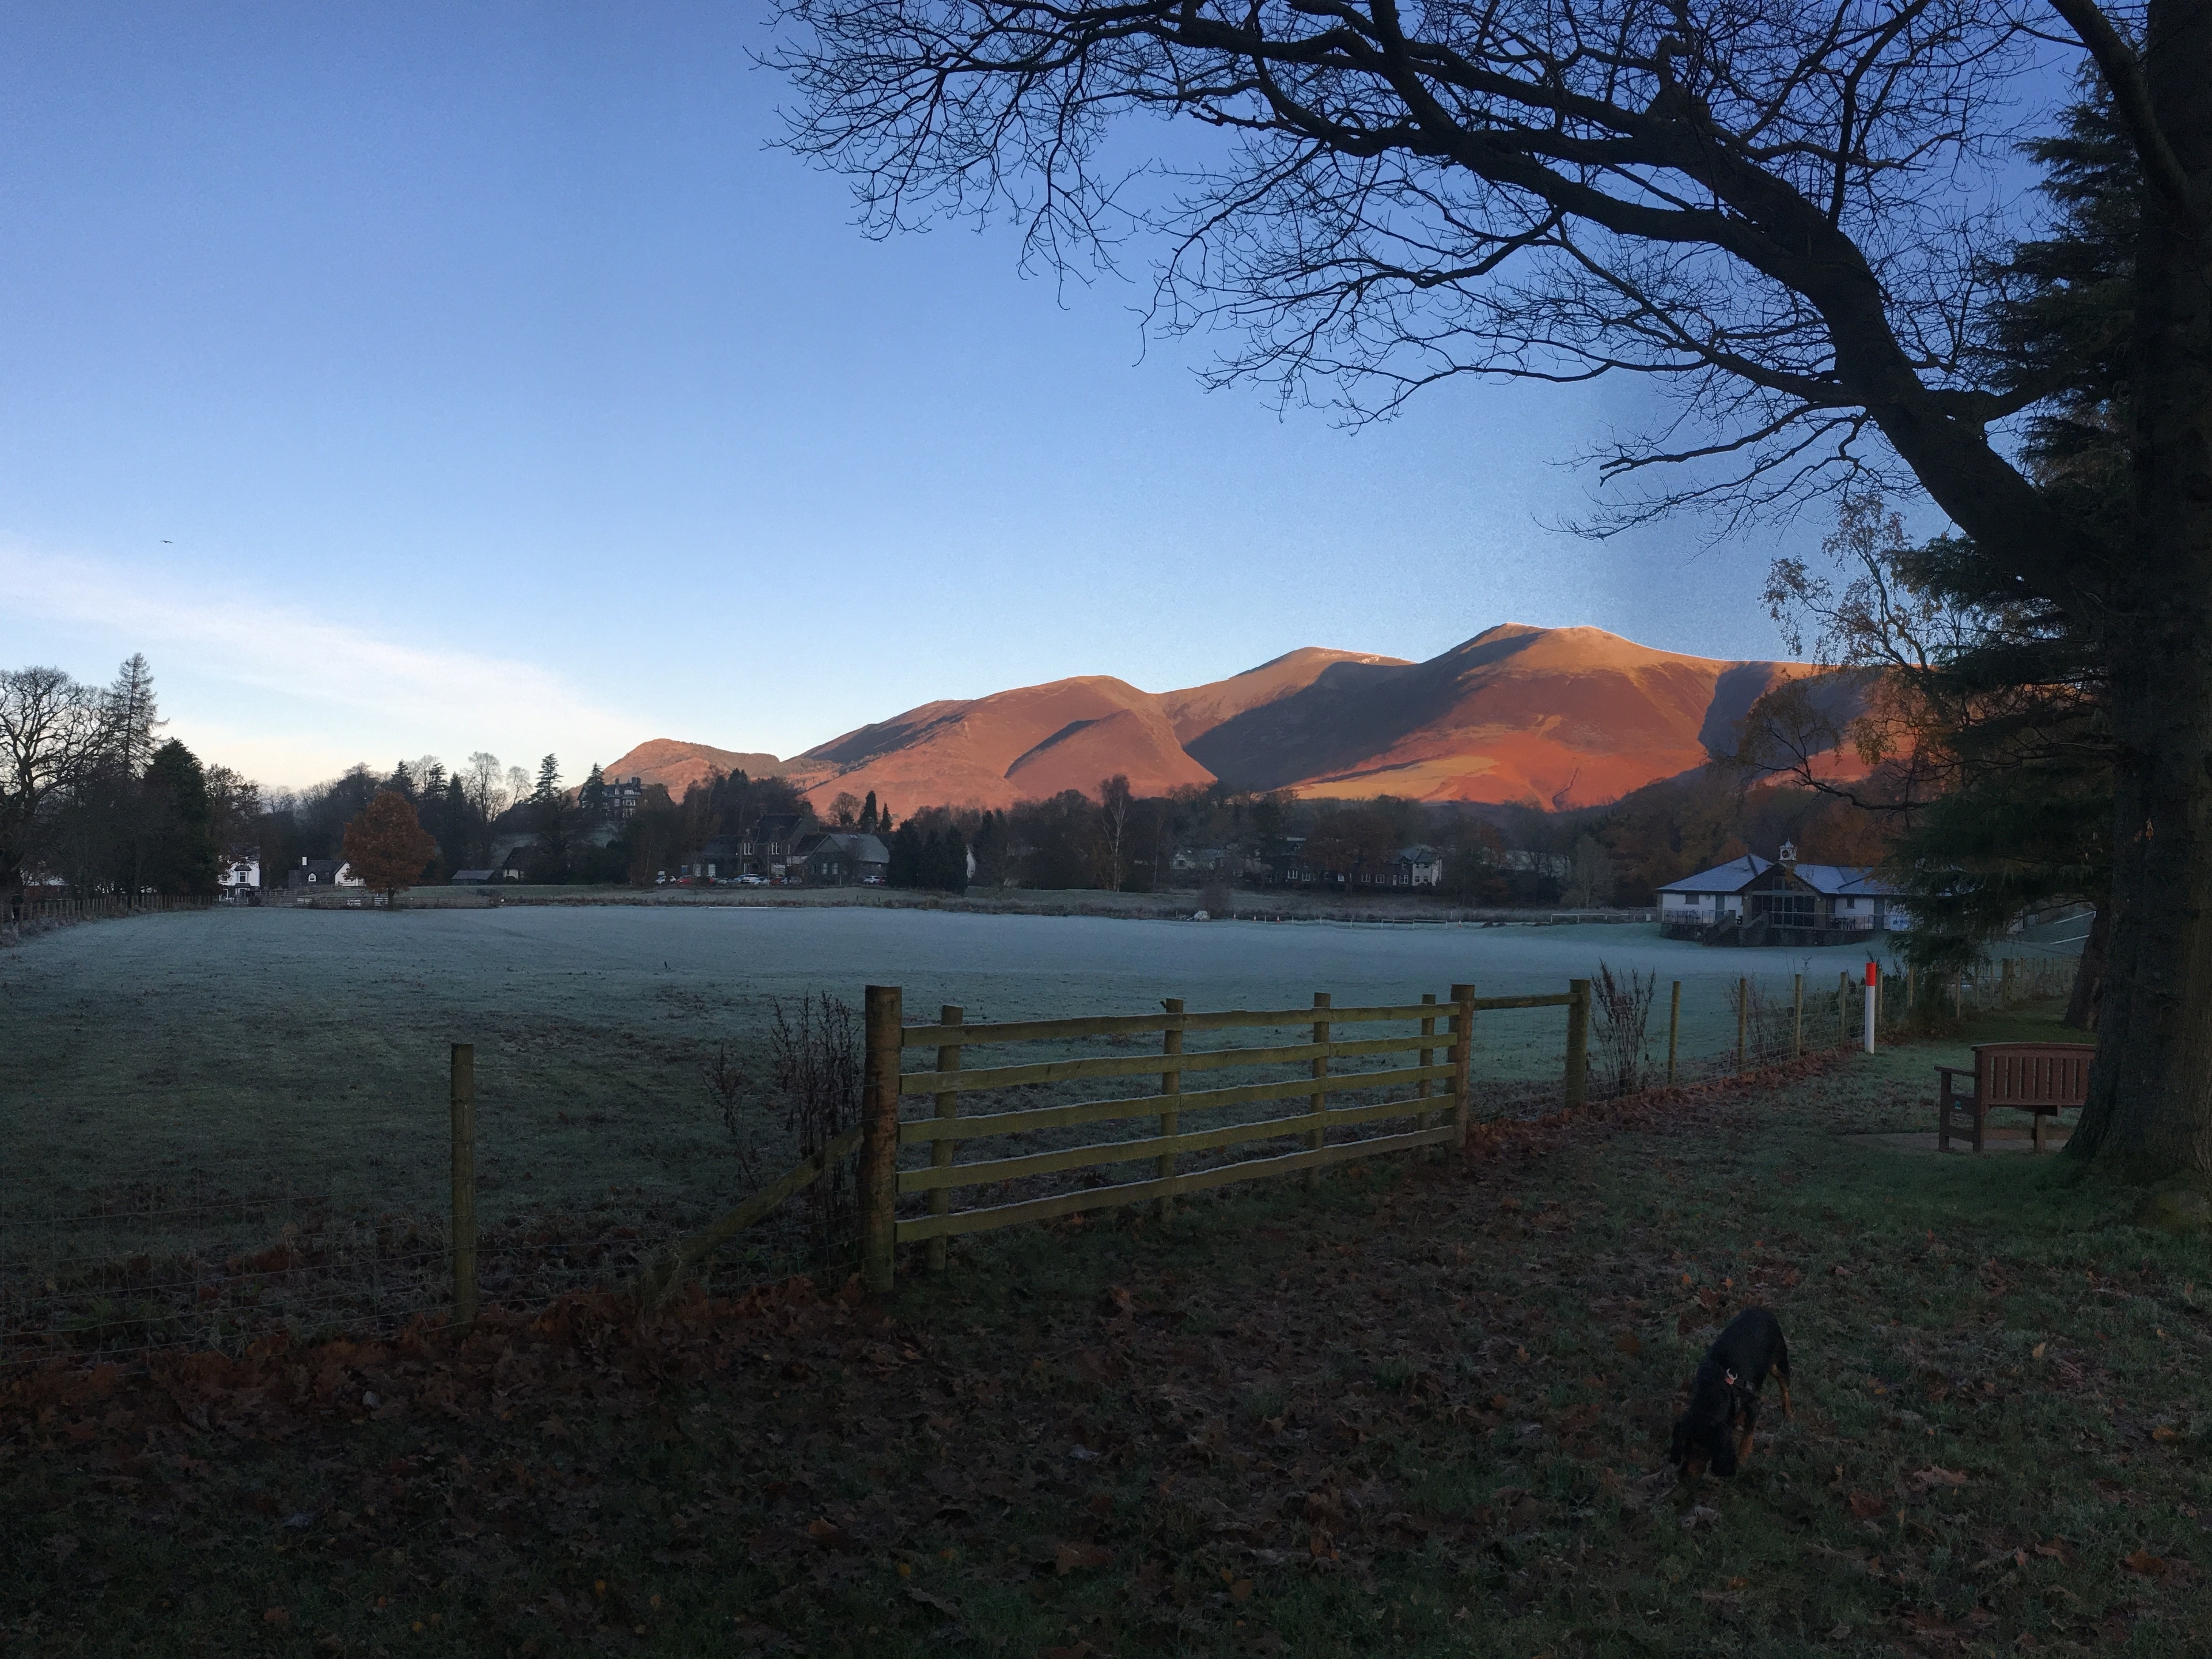 Frosty fields this morning
Brrrrr...